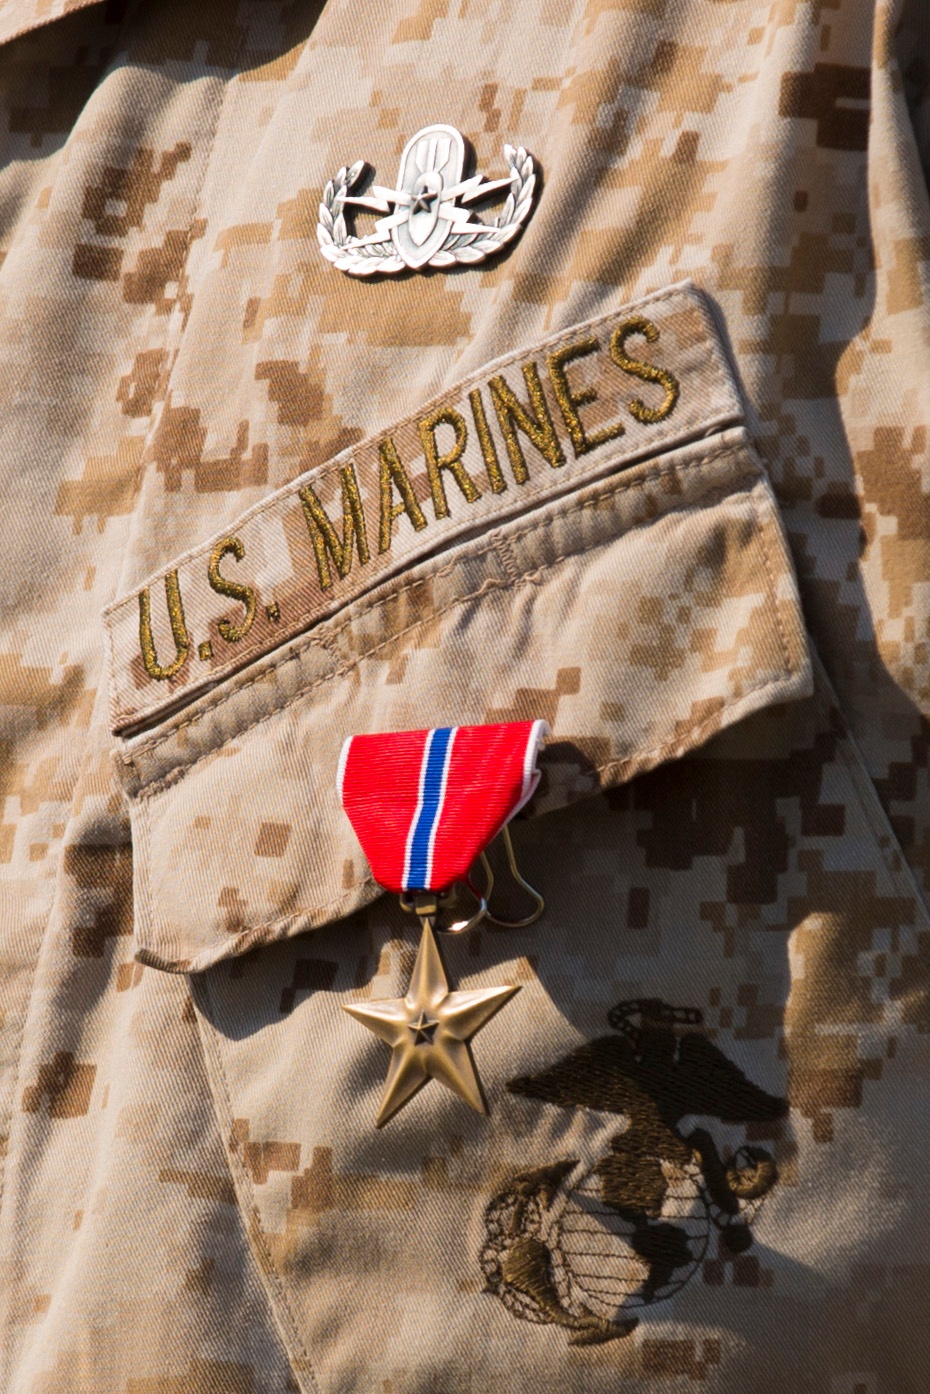 Explosive Ordnance Disposal Marine awarded Bronze Star